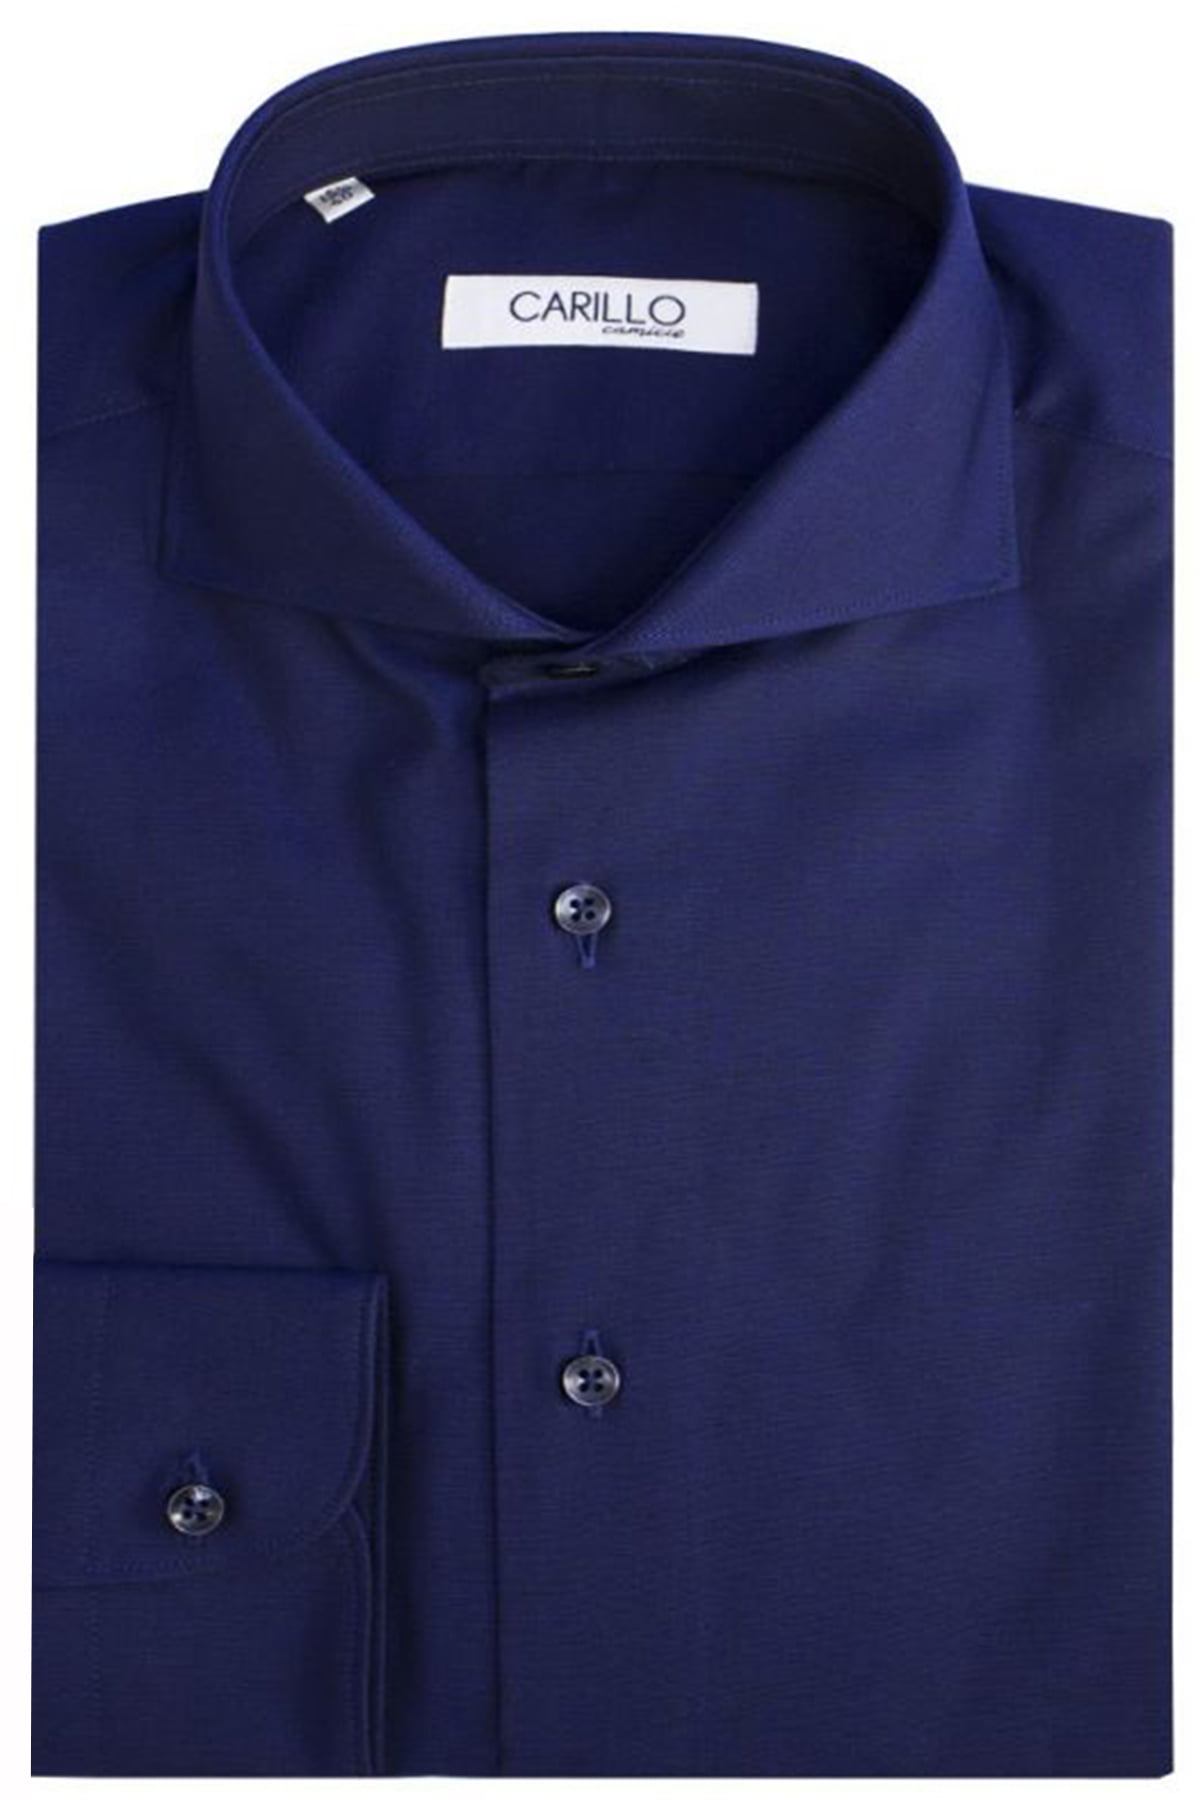 Camicia Uomo Collo Francese Blu regular fit